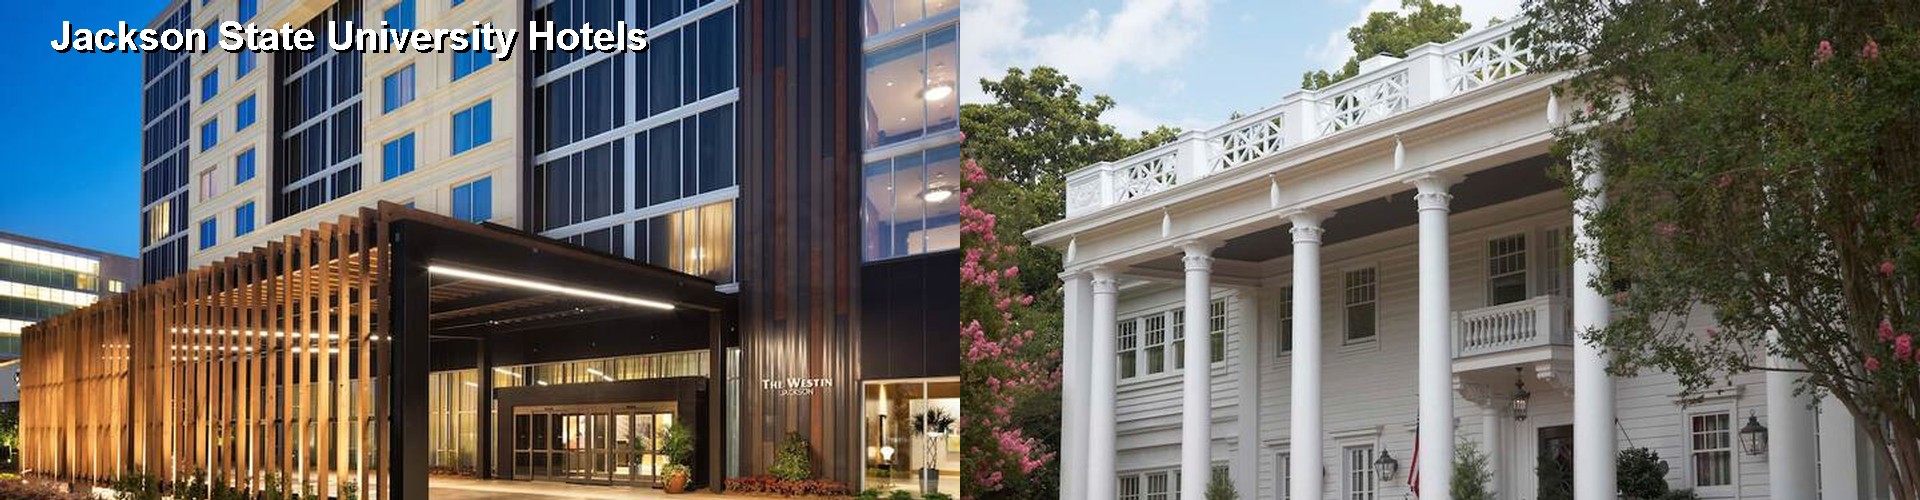 3 Best Hotels near Jackson State University